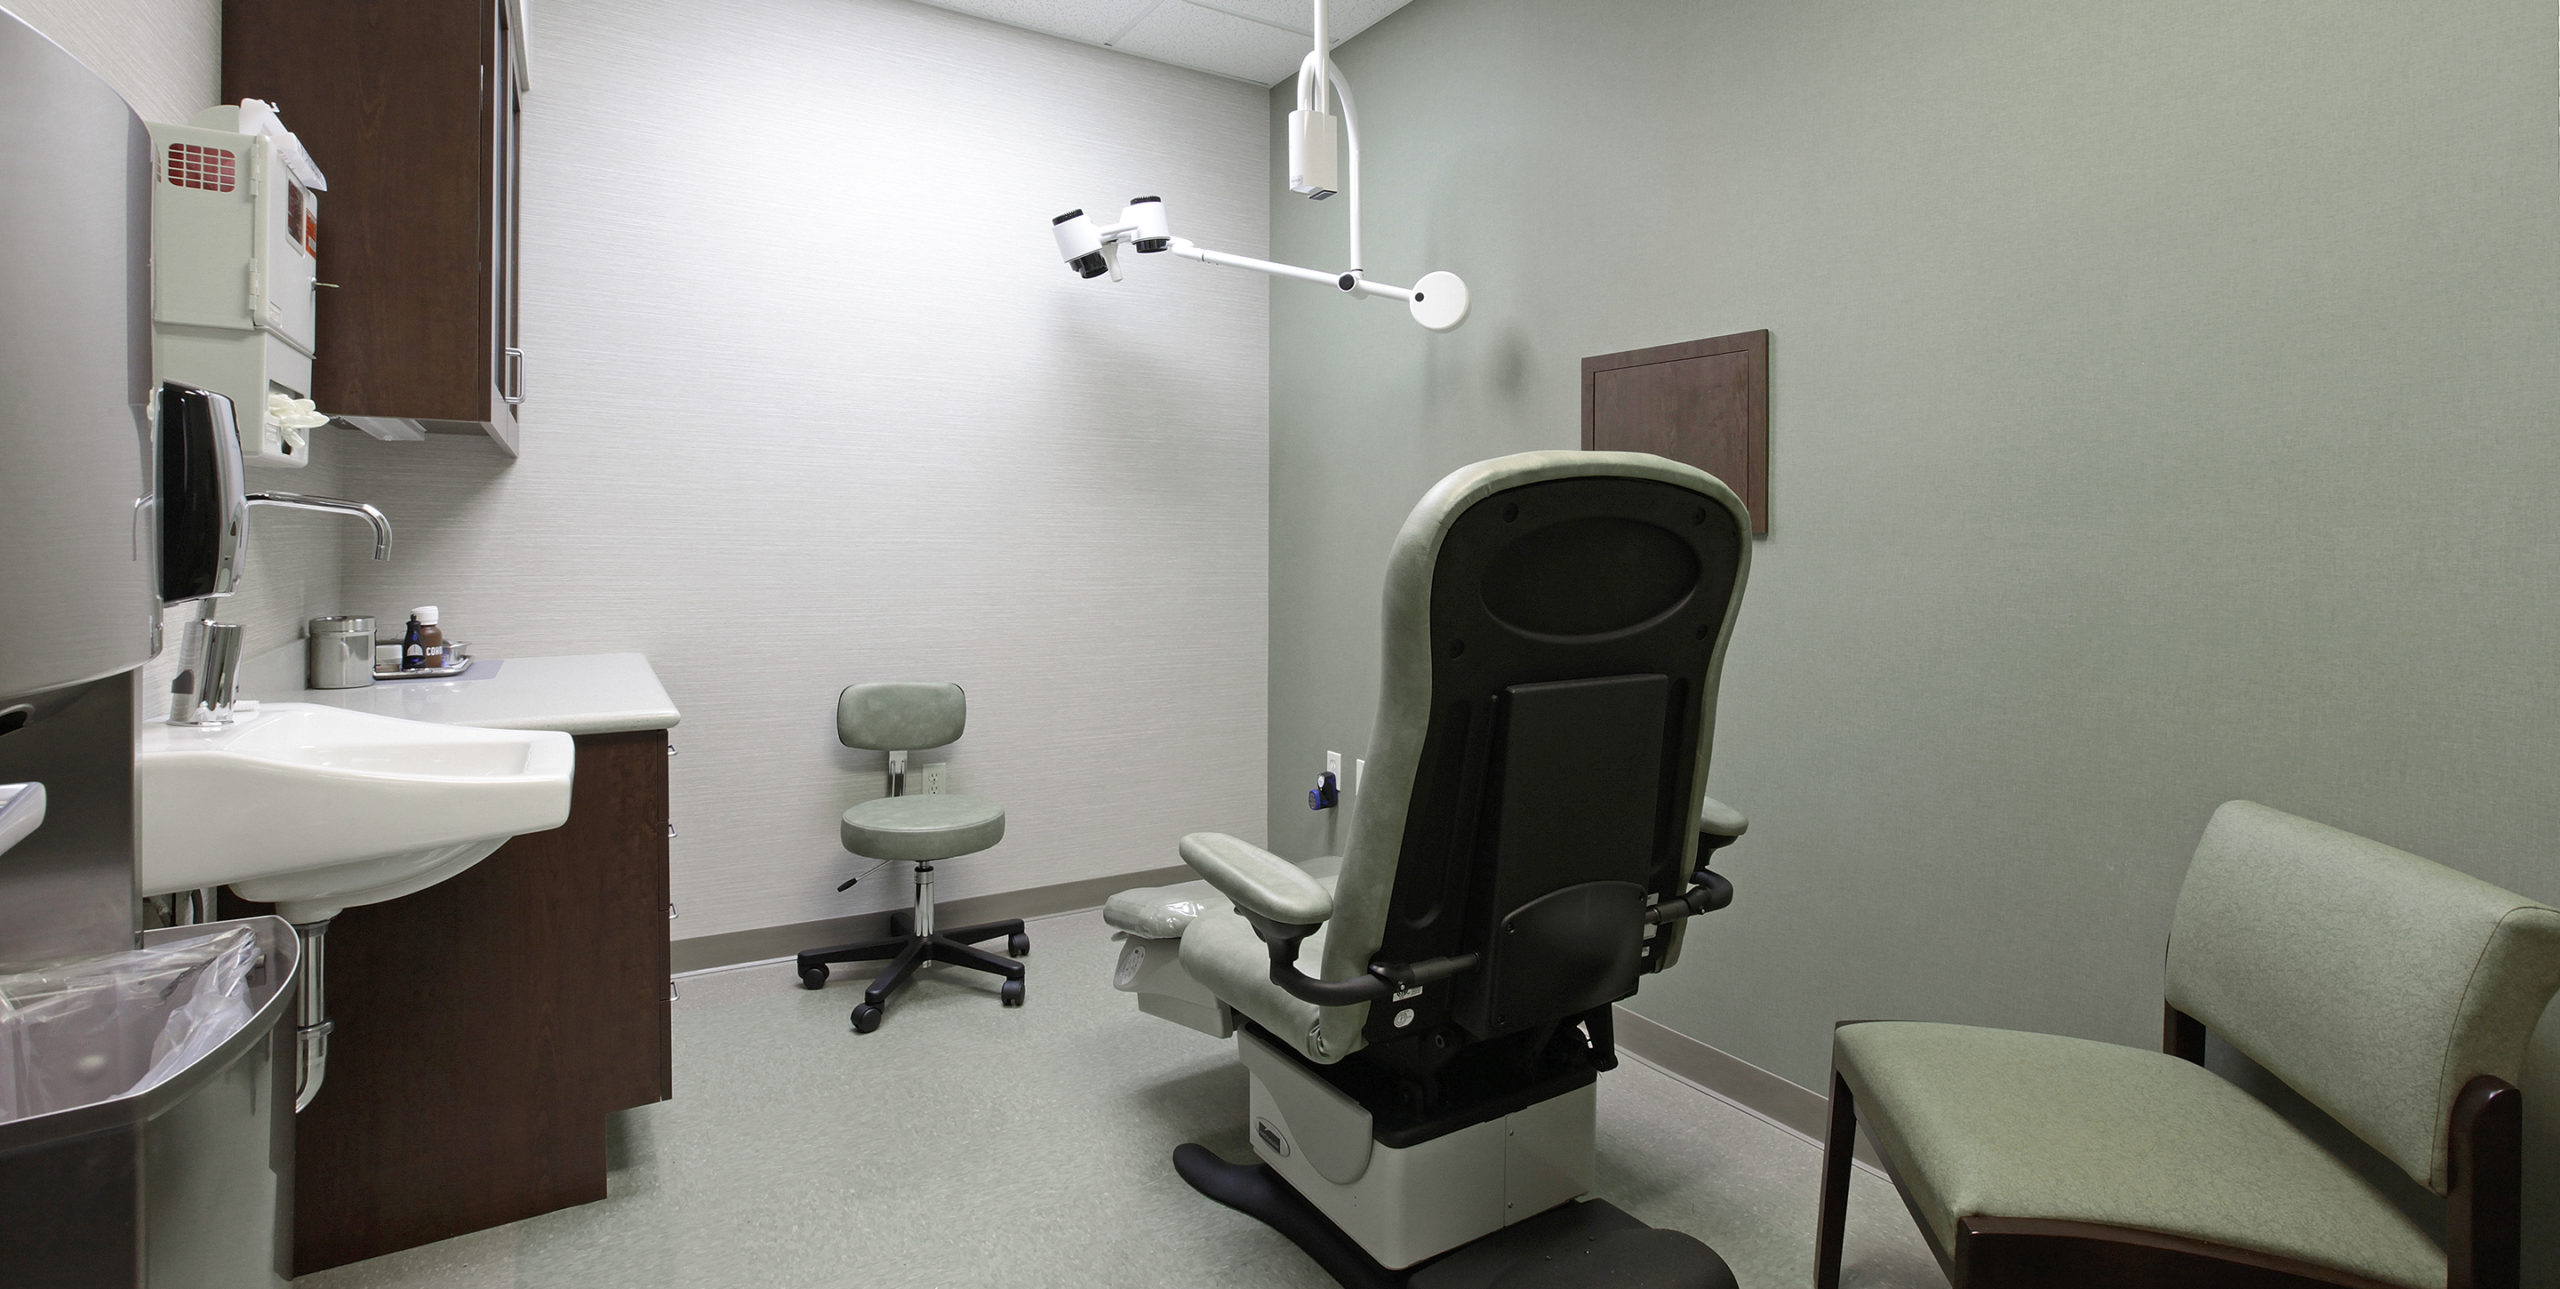 Exam room at Dr. Furst's podiatrist office at 4 Technology Drive, East Setauket